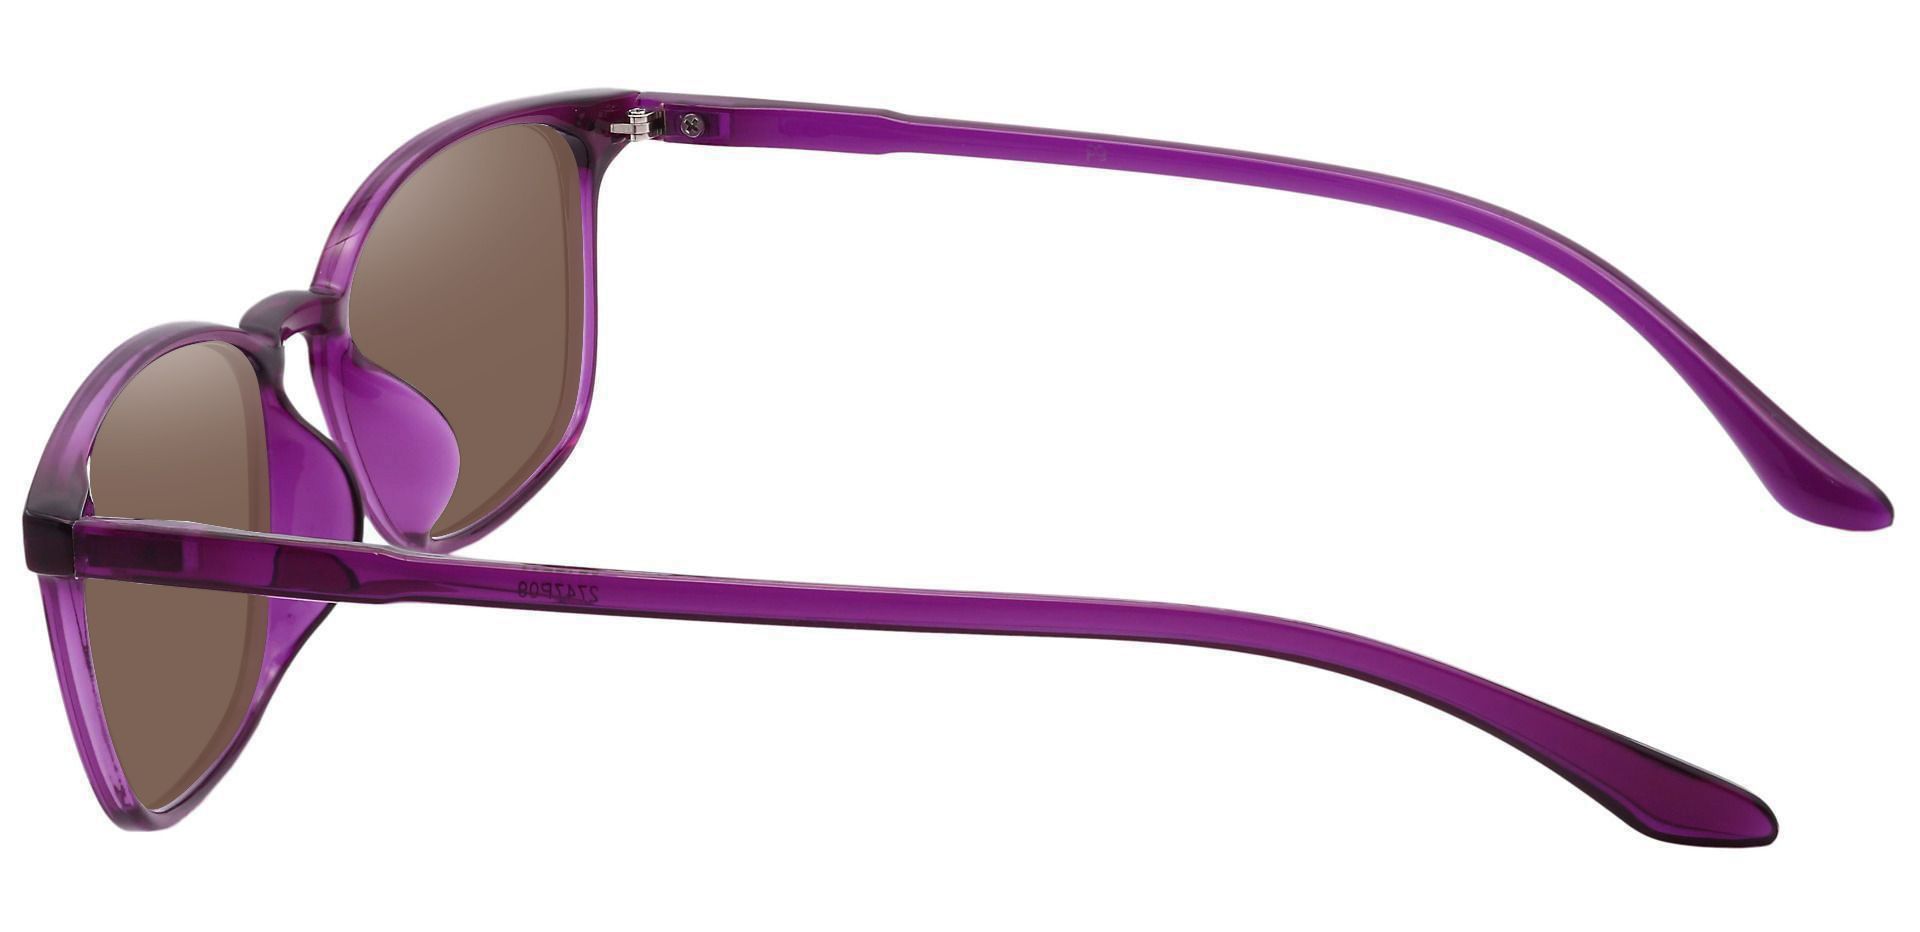 Cabo Oval Progressive Sunglasses -  Purple Frame With Brown Lenses